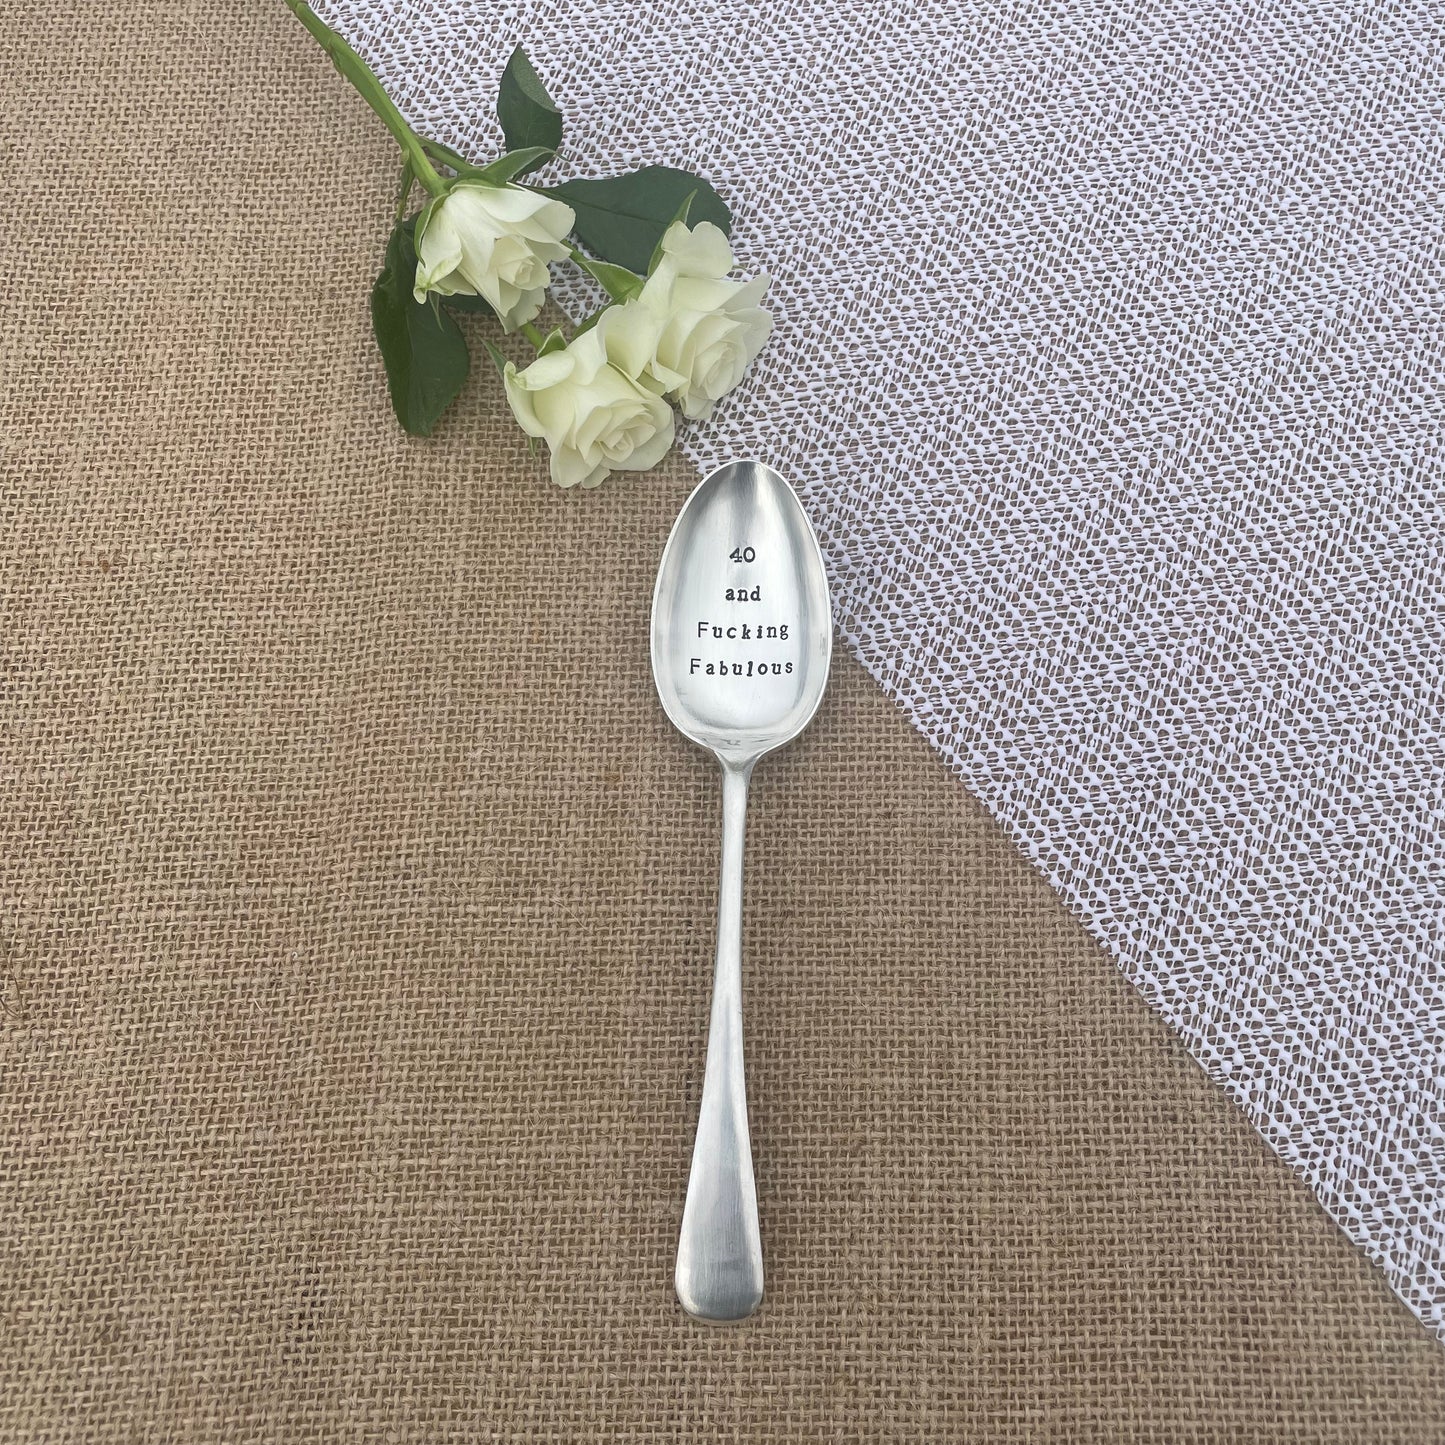 40 and Fucking Fabulous - Vintage Desert Spoon